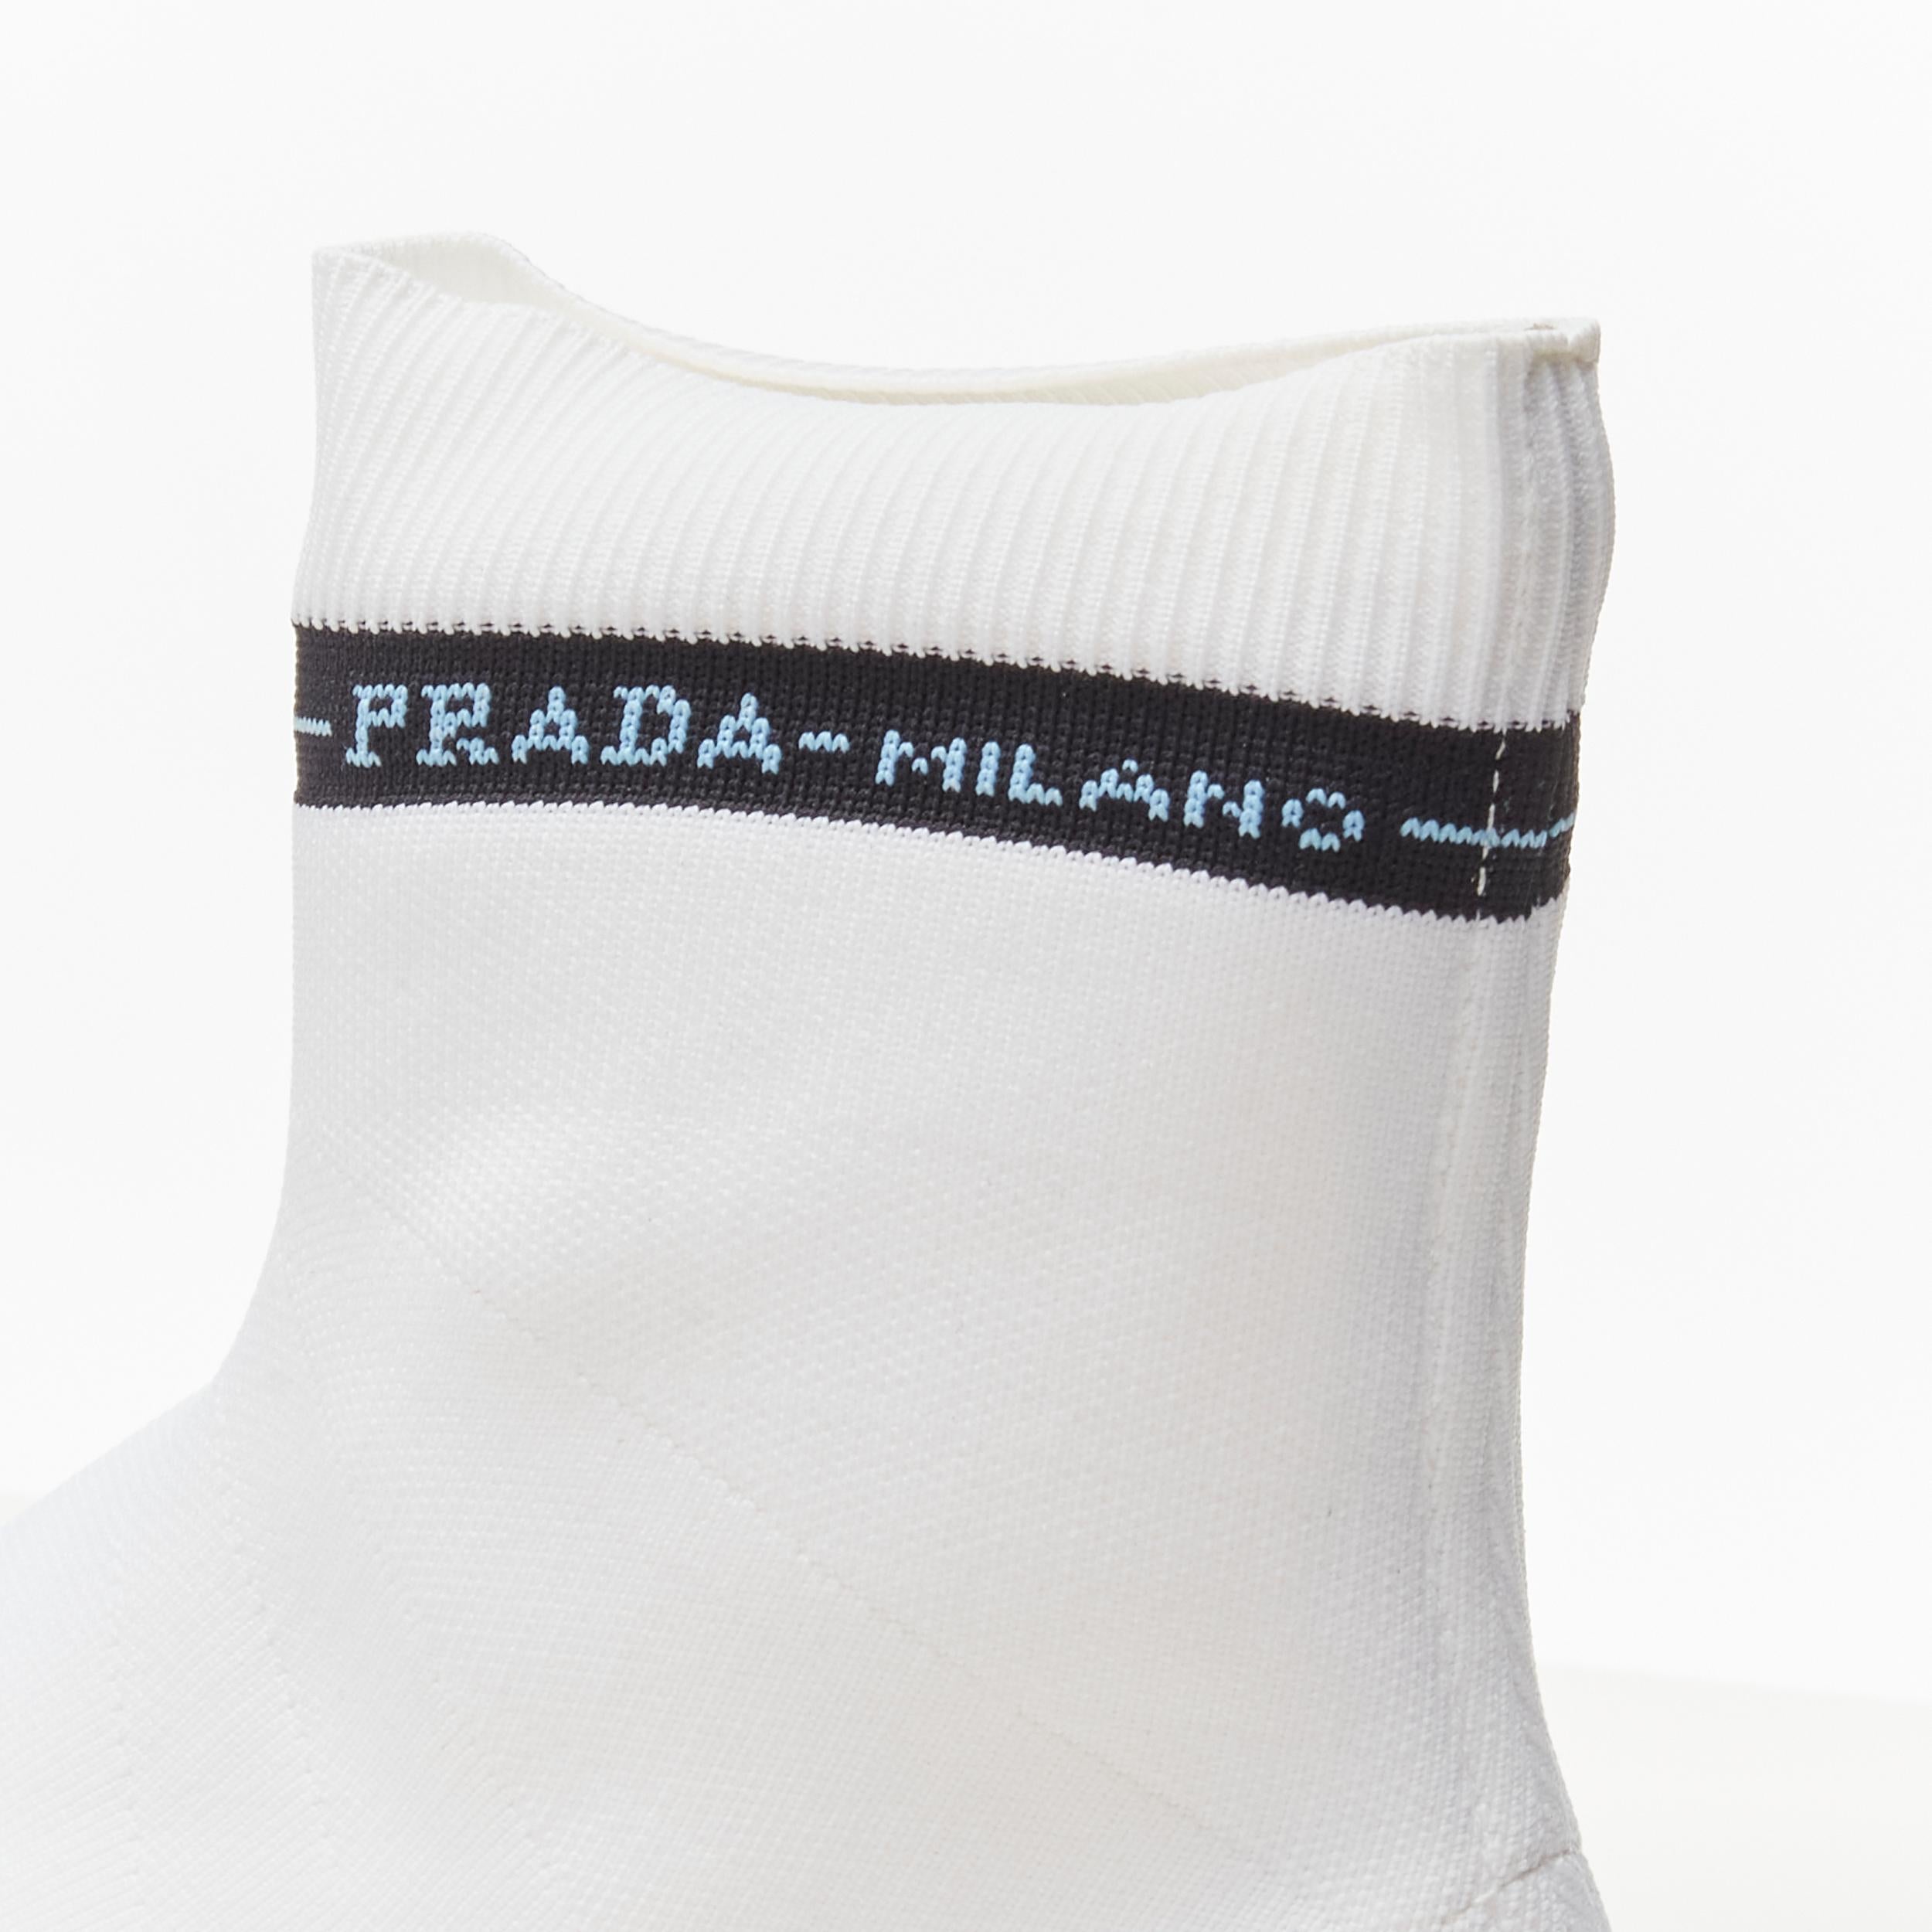 PRADA Milano schwarzes Logo Band weiße Socke stricken hohe Top-Sneaker EU35.5 
Referenz: ANWU/A00369 
Marke: Prada 
Designer: Miuccia Prada 
MATERIAL: Stoff 
Farbe: Weiß 
Muster: Solide 
Verschluss: Stretch 
Extra Detail: Schwarze Prada Milano